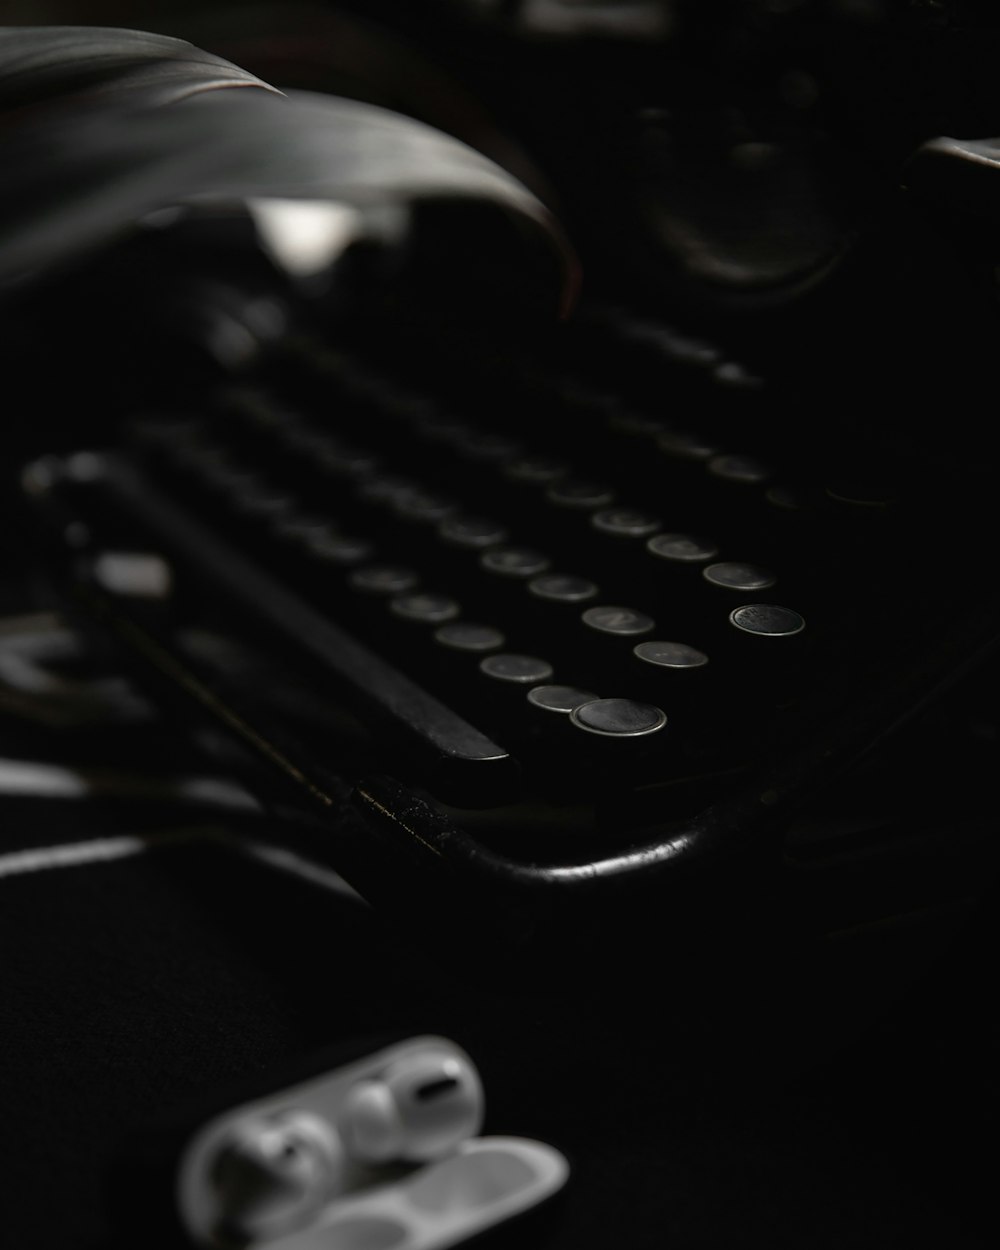 black and silver typewriter on black table photo – Free Guadalajara Image  on Unsplash